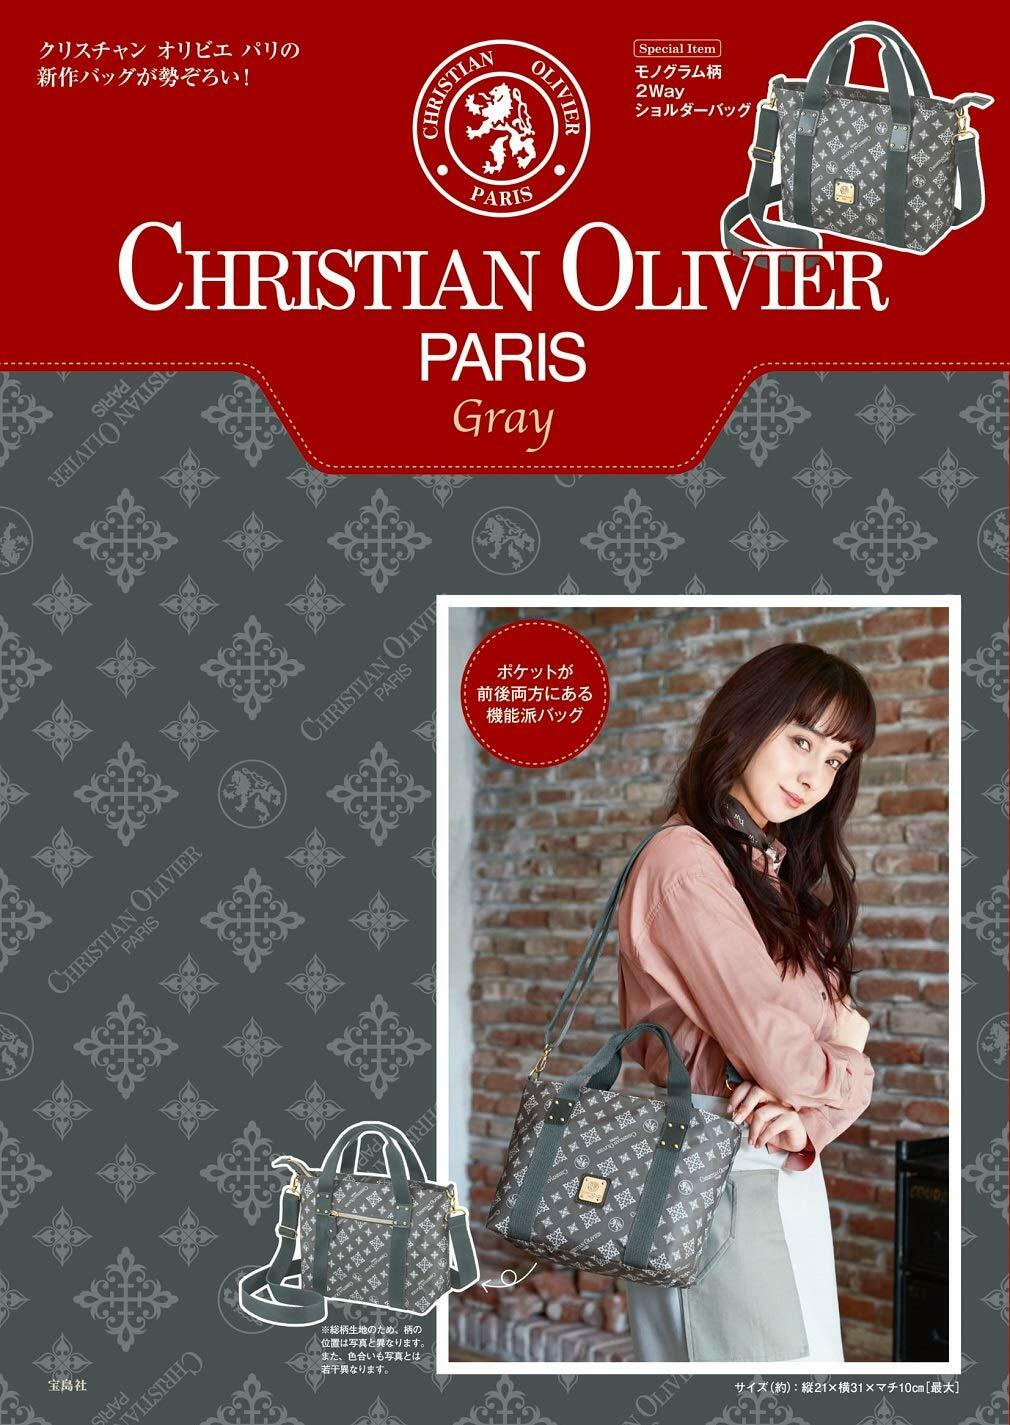 CHRISTIAN OLIVIER PARIS Gray